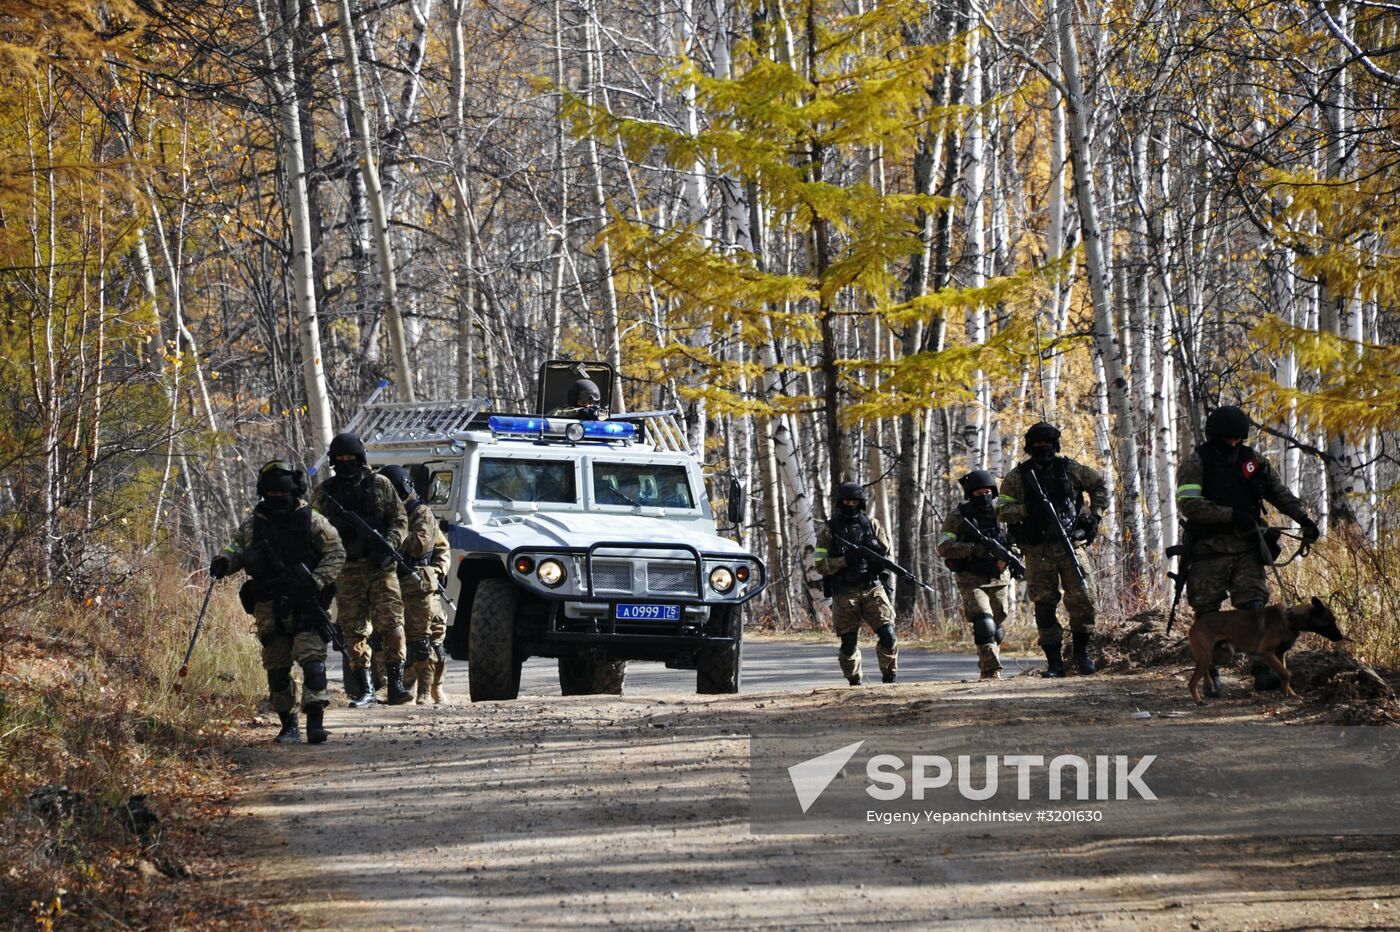 Terrain 2017 military exercise in Trans-Baikal Territory